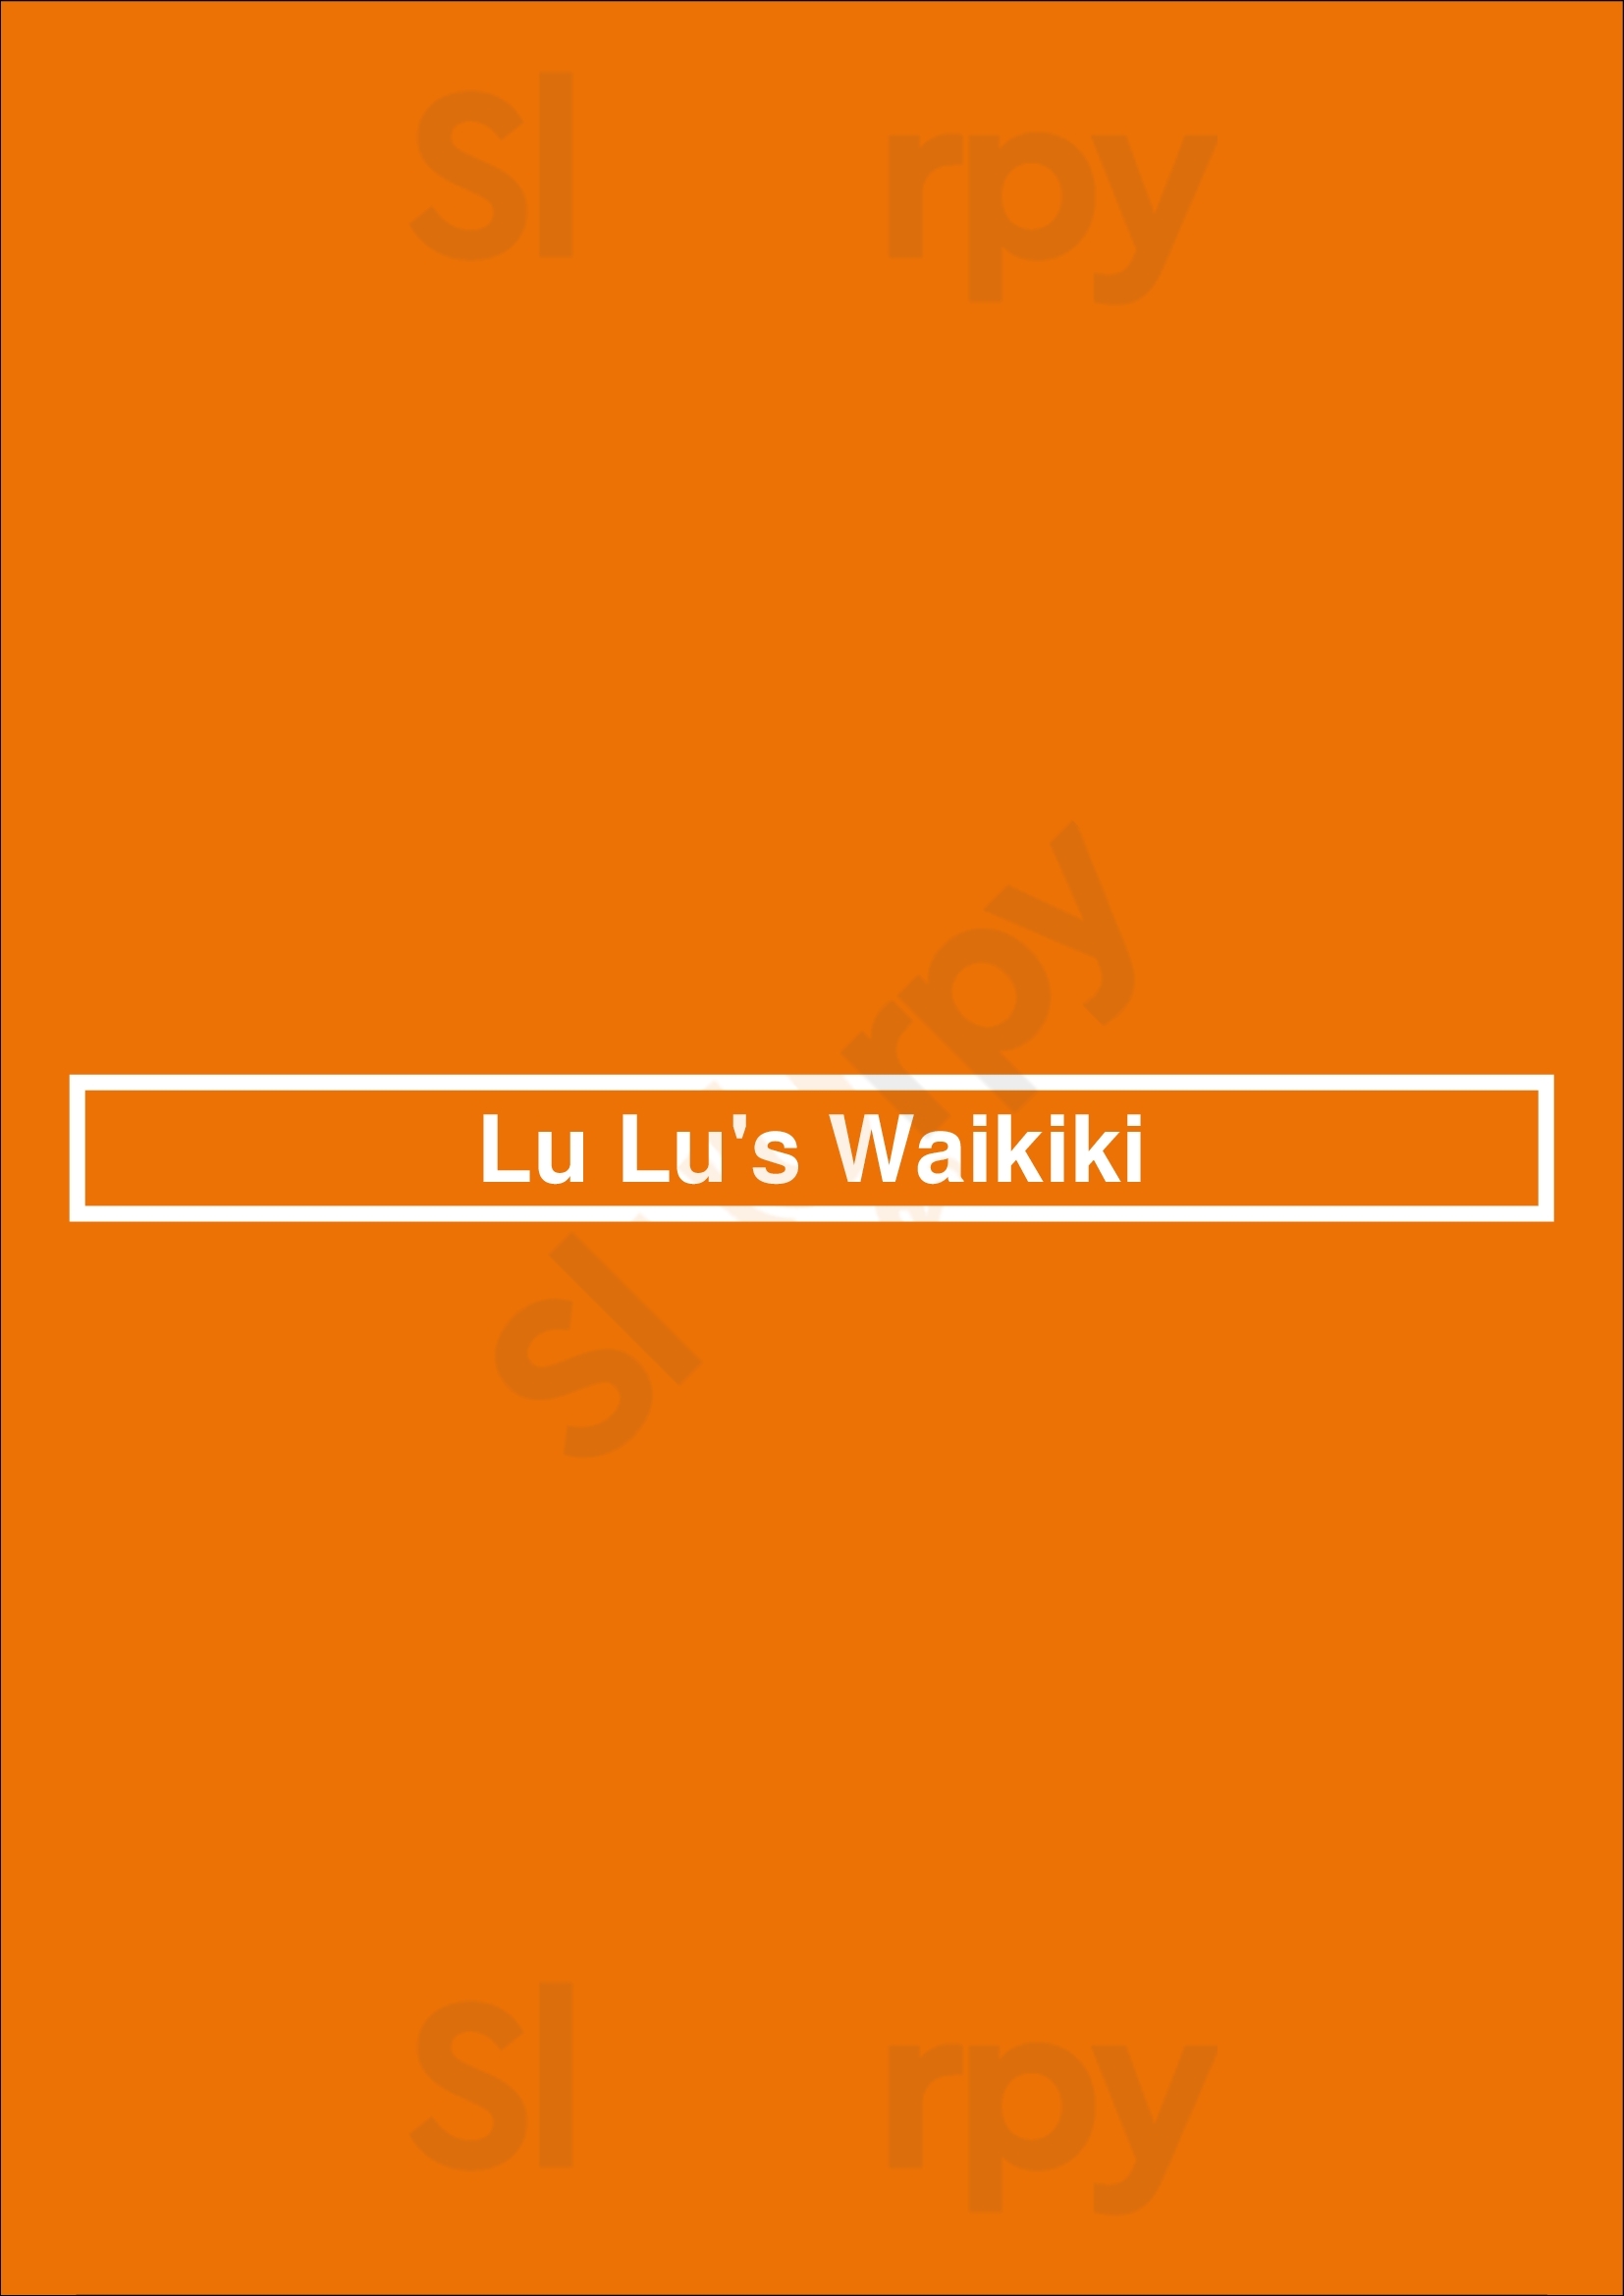 Lulu's Waikiki Honolulu Menu - 1